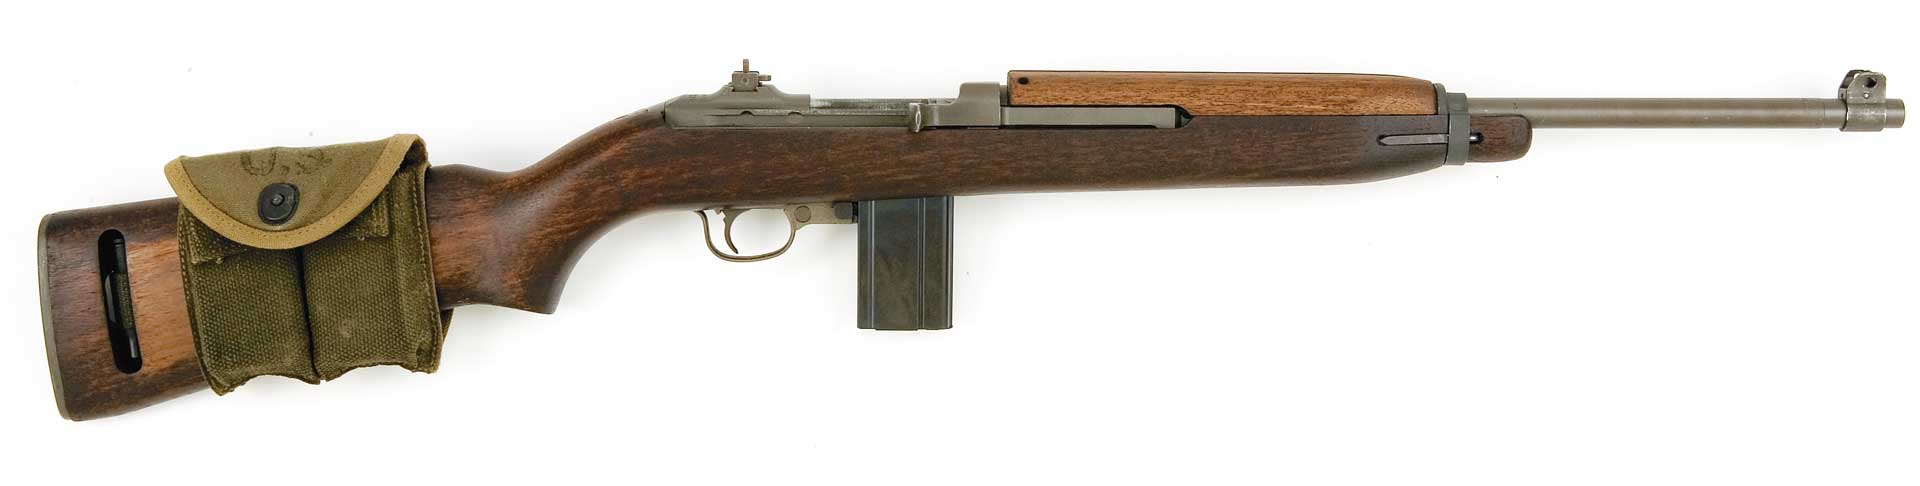 right side rifle gun m1 carbine pouches metal wood